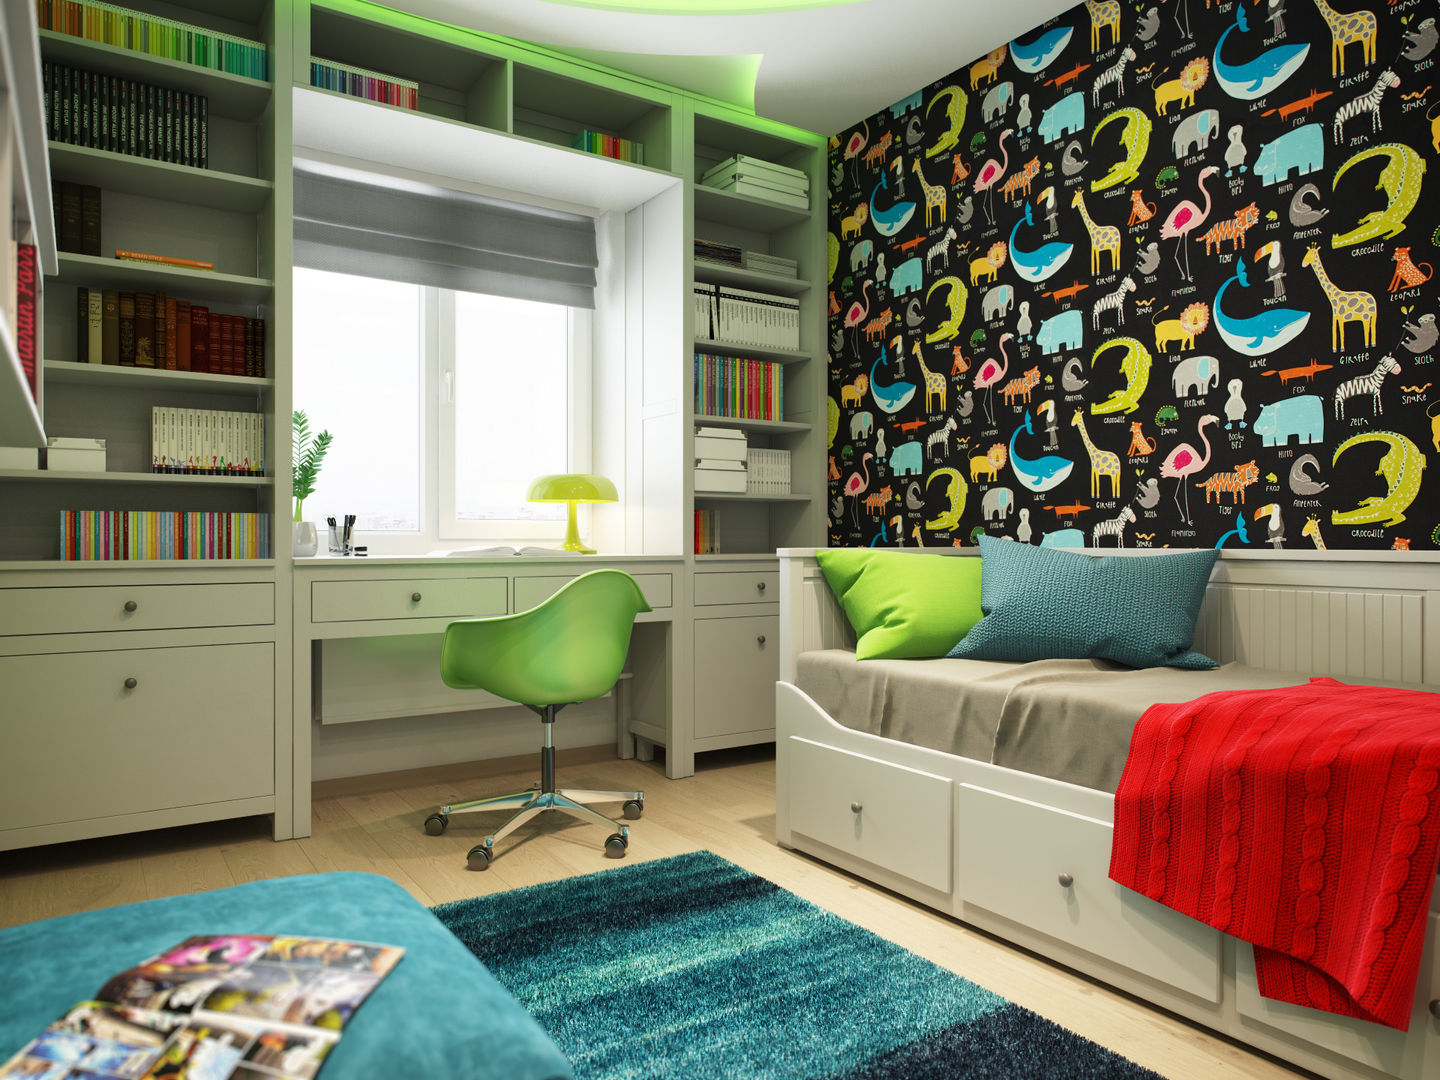 Apartment in Tomsk, EVGENY BELYAEV DESIGN EVGENY BELYAEV DESIGN Dormitorios infantiles